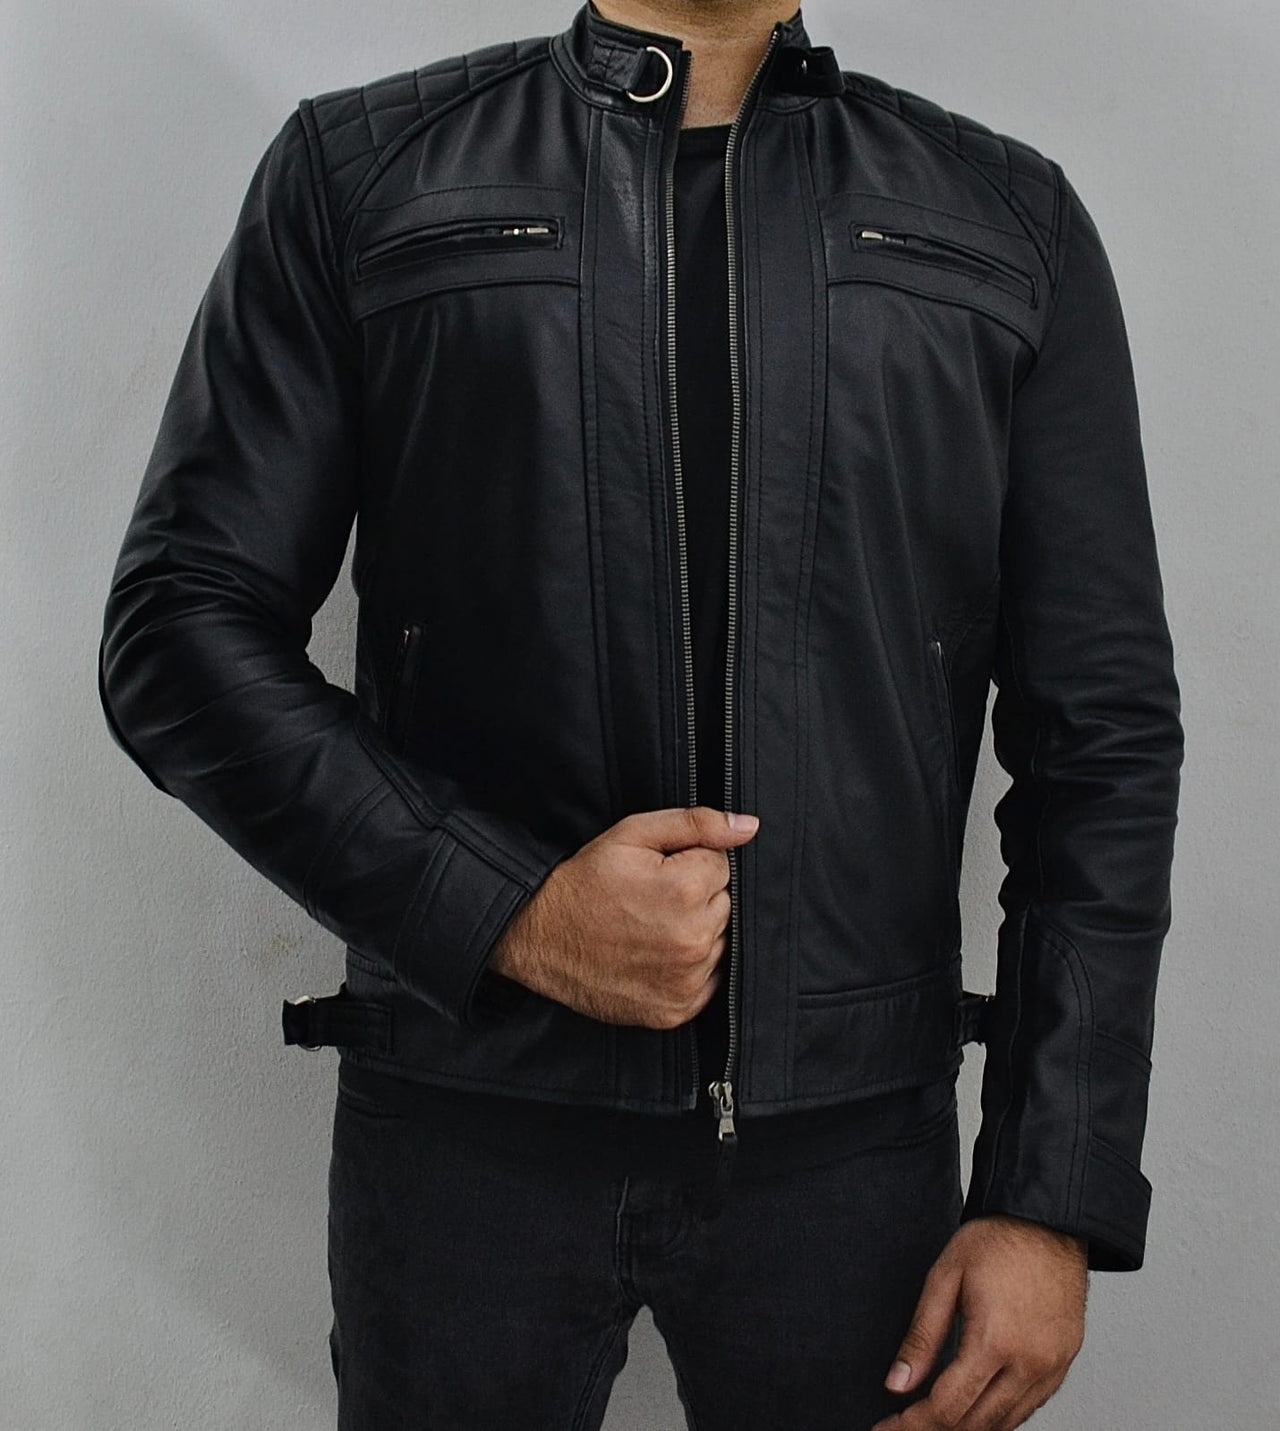 Men's Biker Style  Black Leather Jacket